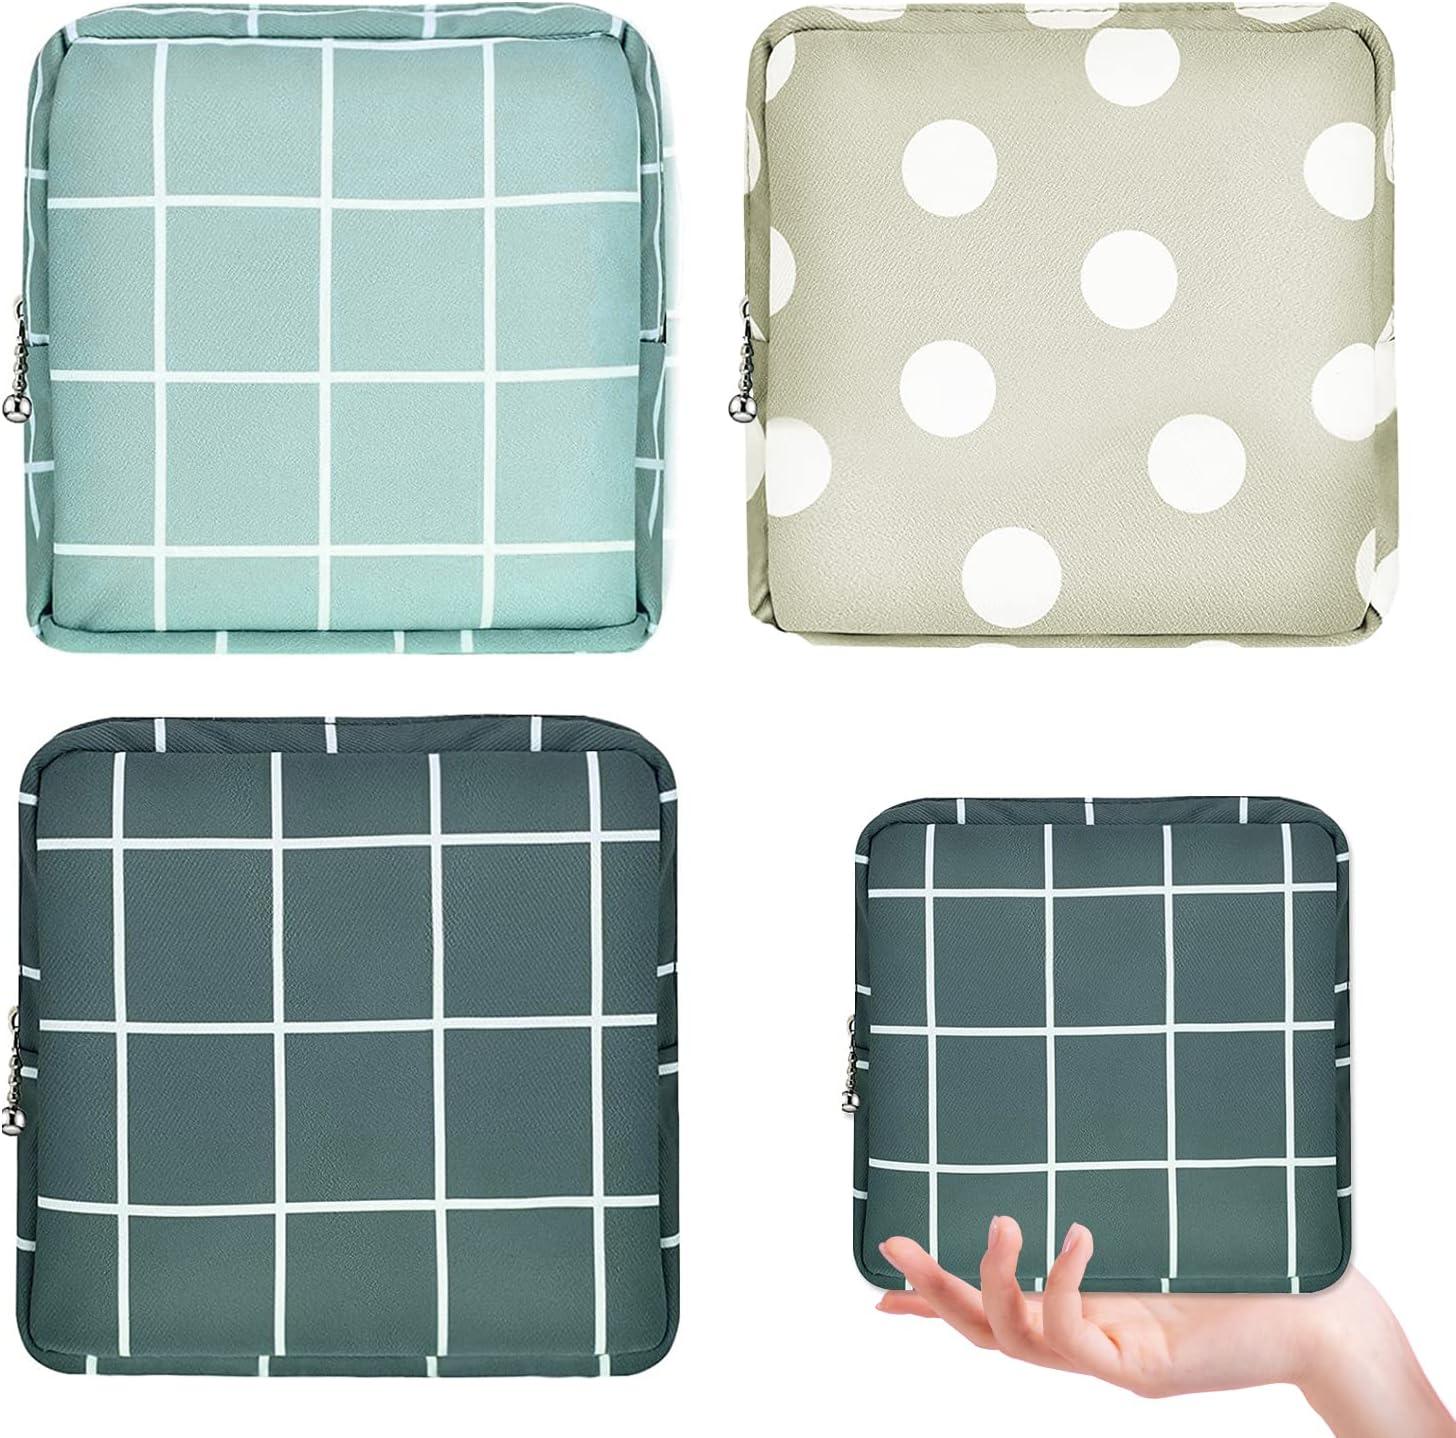 Key Holder Tampon Case Sanitary Napkin Pads Coin Purse Cartoon Storage Bag  | eBay